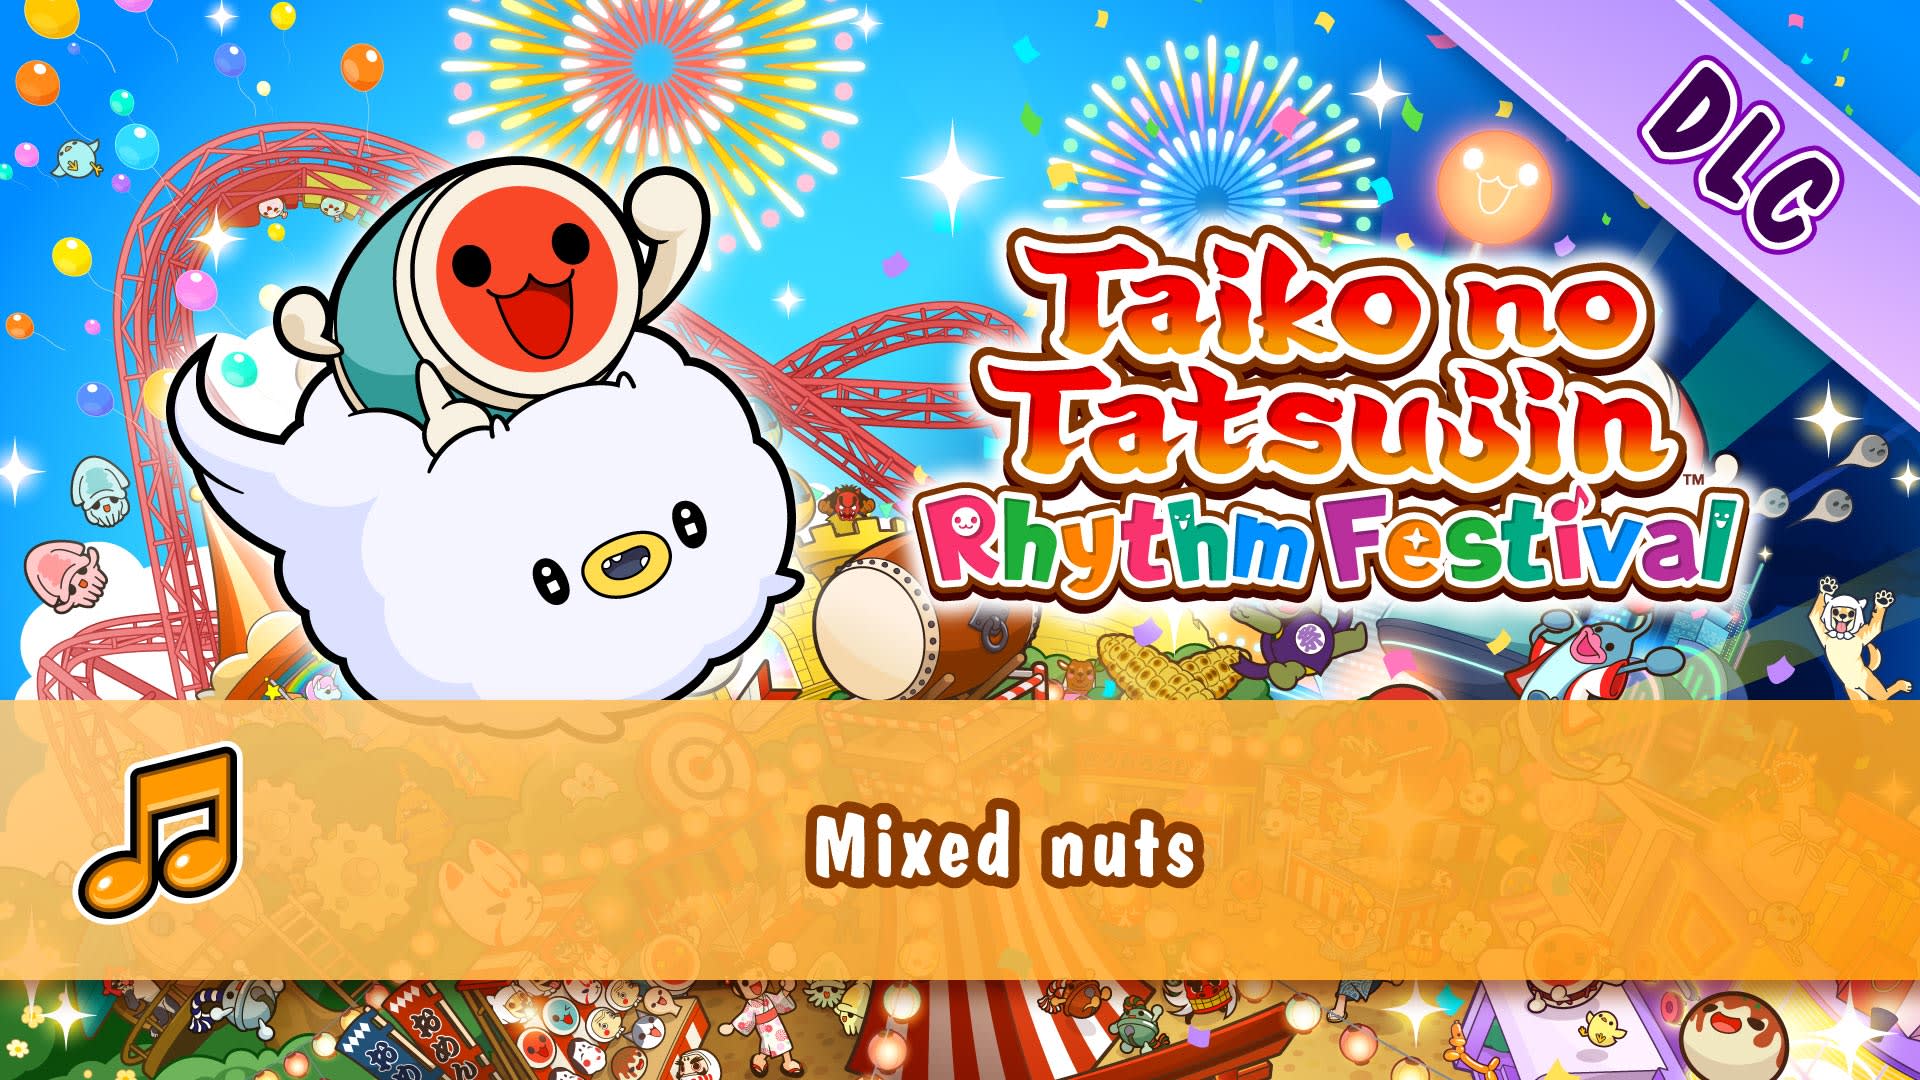 Taiko no Tatsujin: Rhythm Festival - Mixed nuts